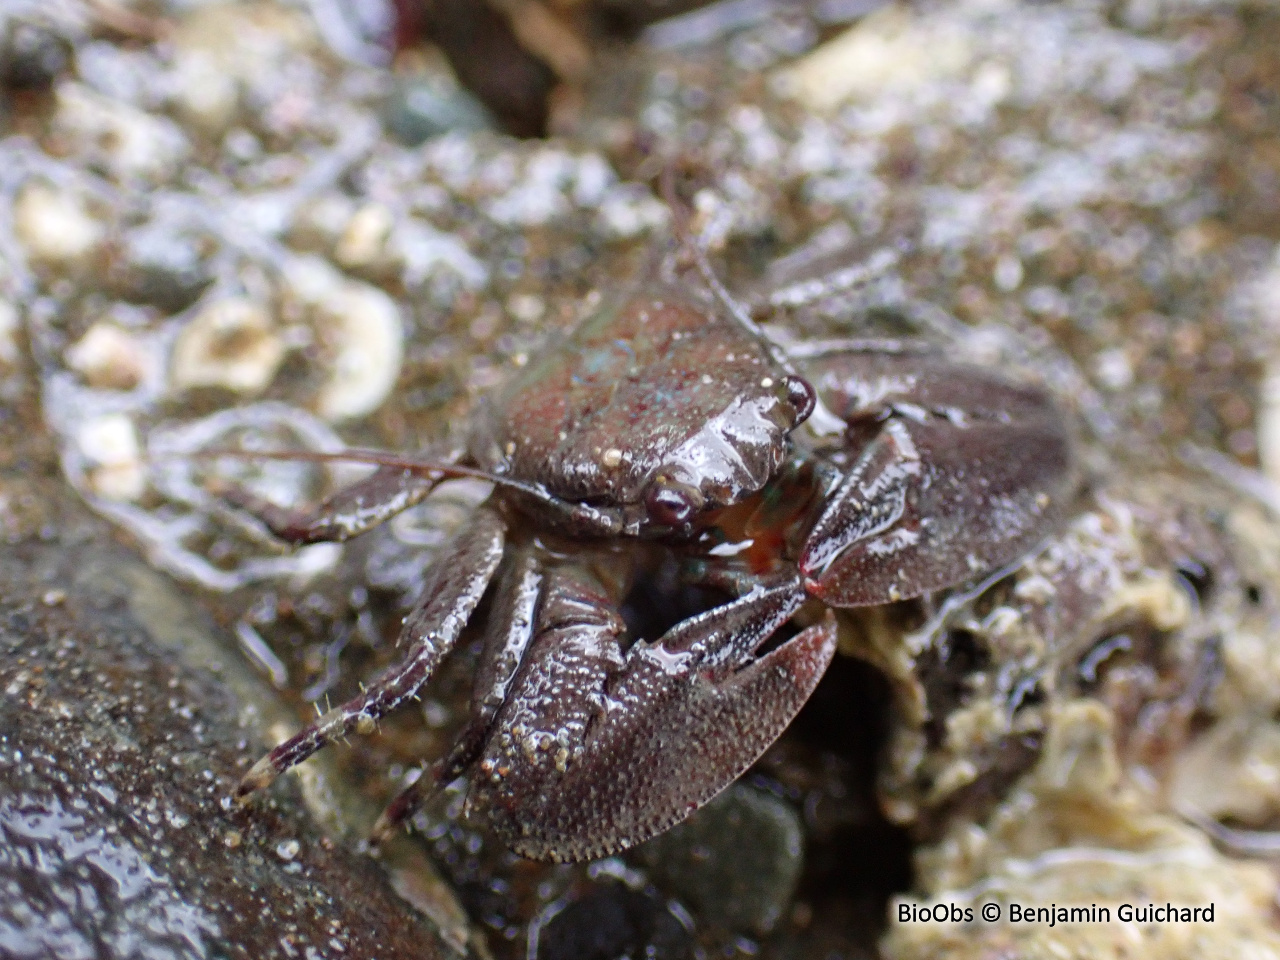 Crabe porcelaine de Lamarck - Petrolisthes lamarckii - Benjamin Guichard - BioObs